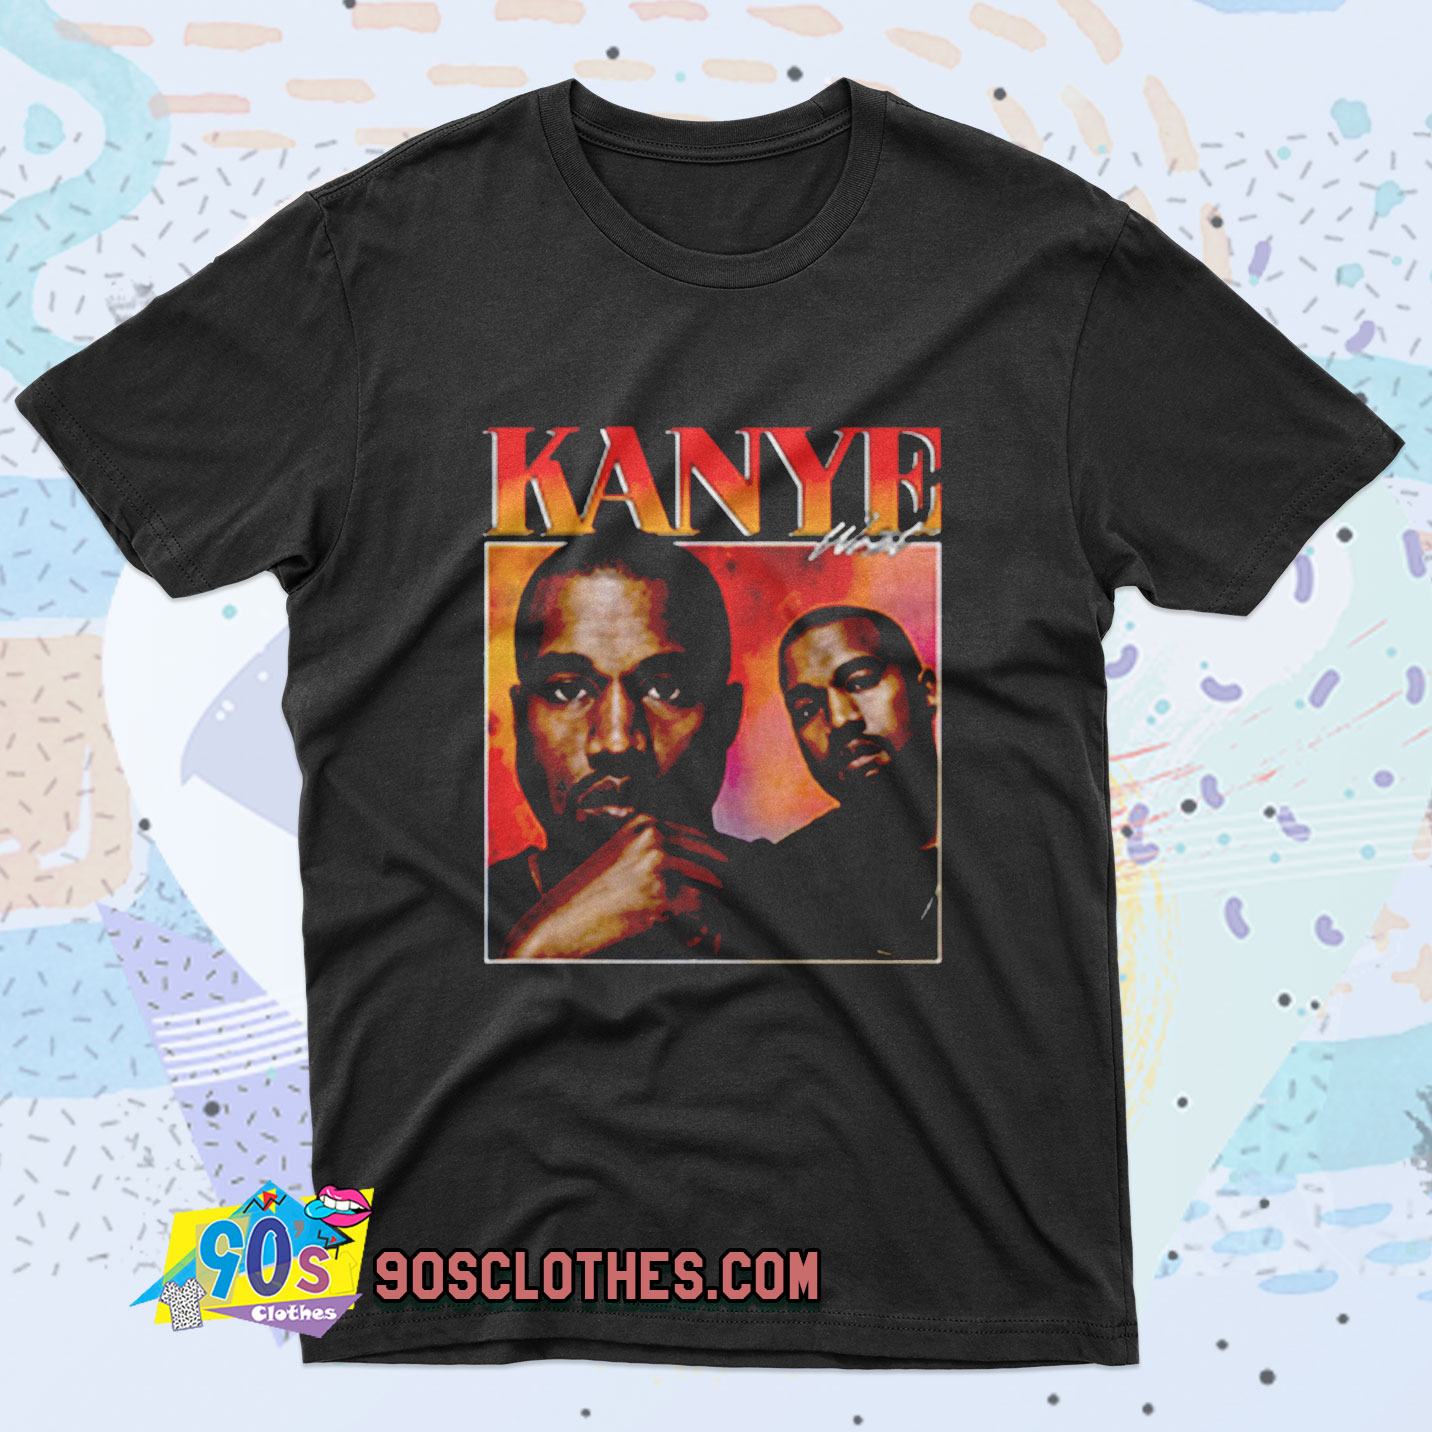 Sneaker Trending Tshirt Short Sleeve Cotton Graphic Printed Yeezy 700 Kanye West Art Tee KANYE SHIRT Wash ORANGE Shirt Kanye West Shirt